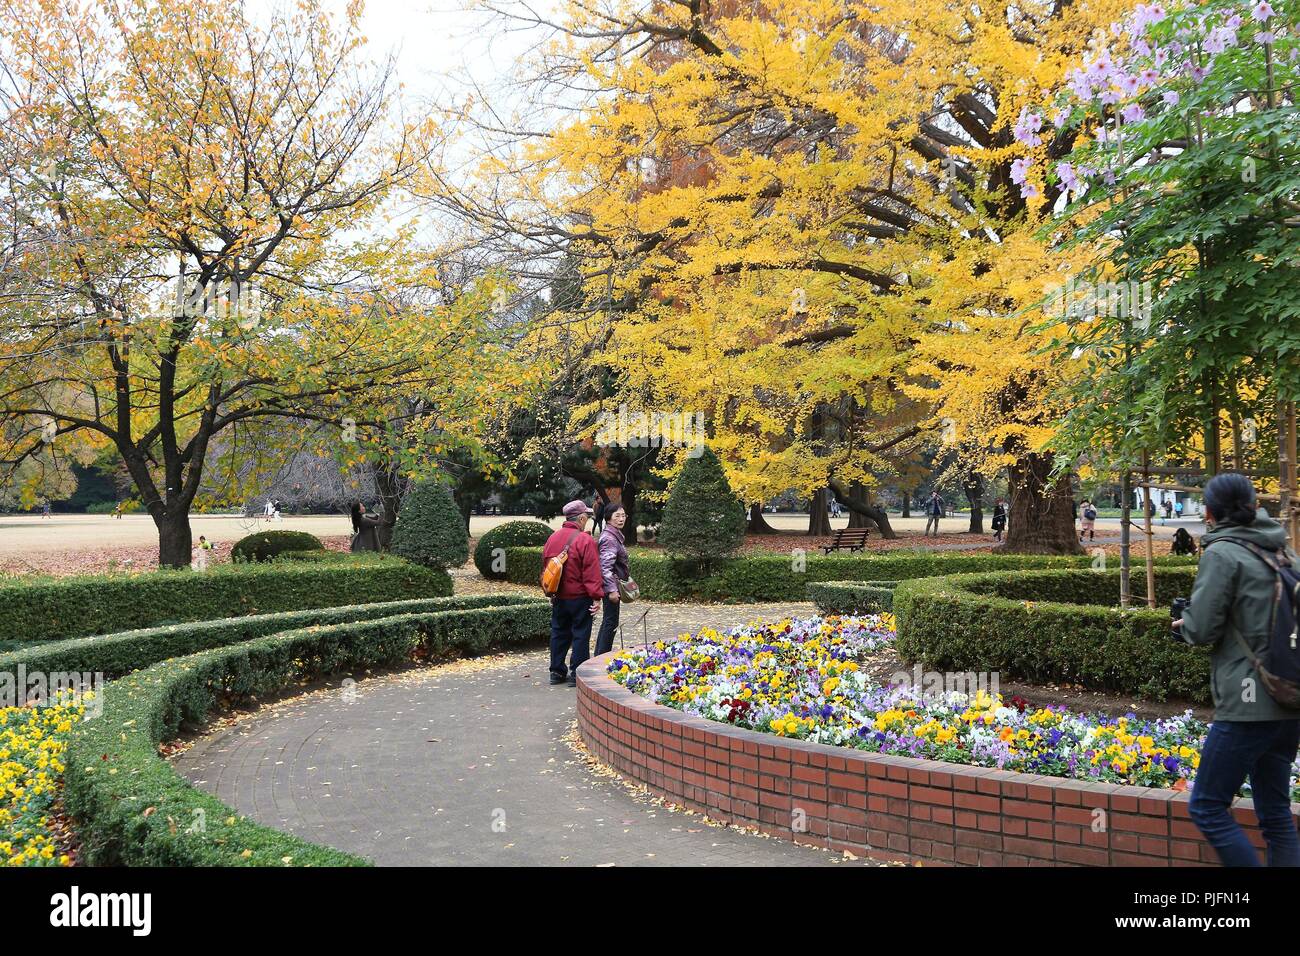 TOKYO, JAPAN - NOVEMBER 30, 2016: People visit Shinjuku Gyoen in Tokyo, Japan. Shinjuku Gyoen park is notable for its celebration of autumn leaves. Stock Photo